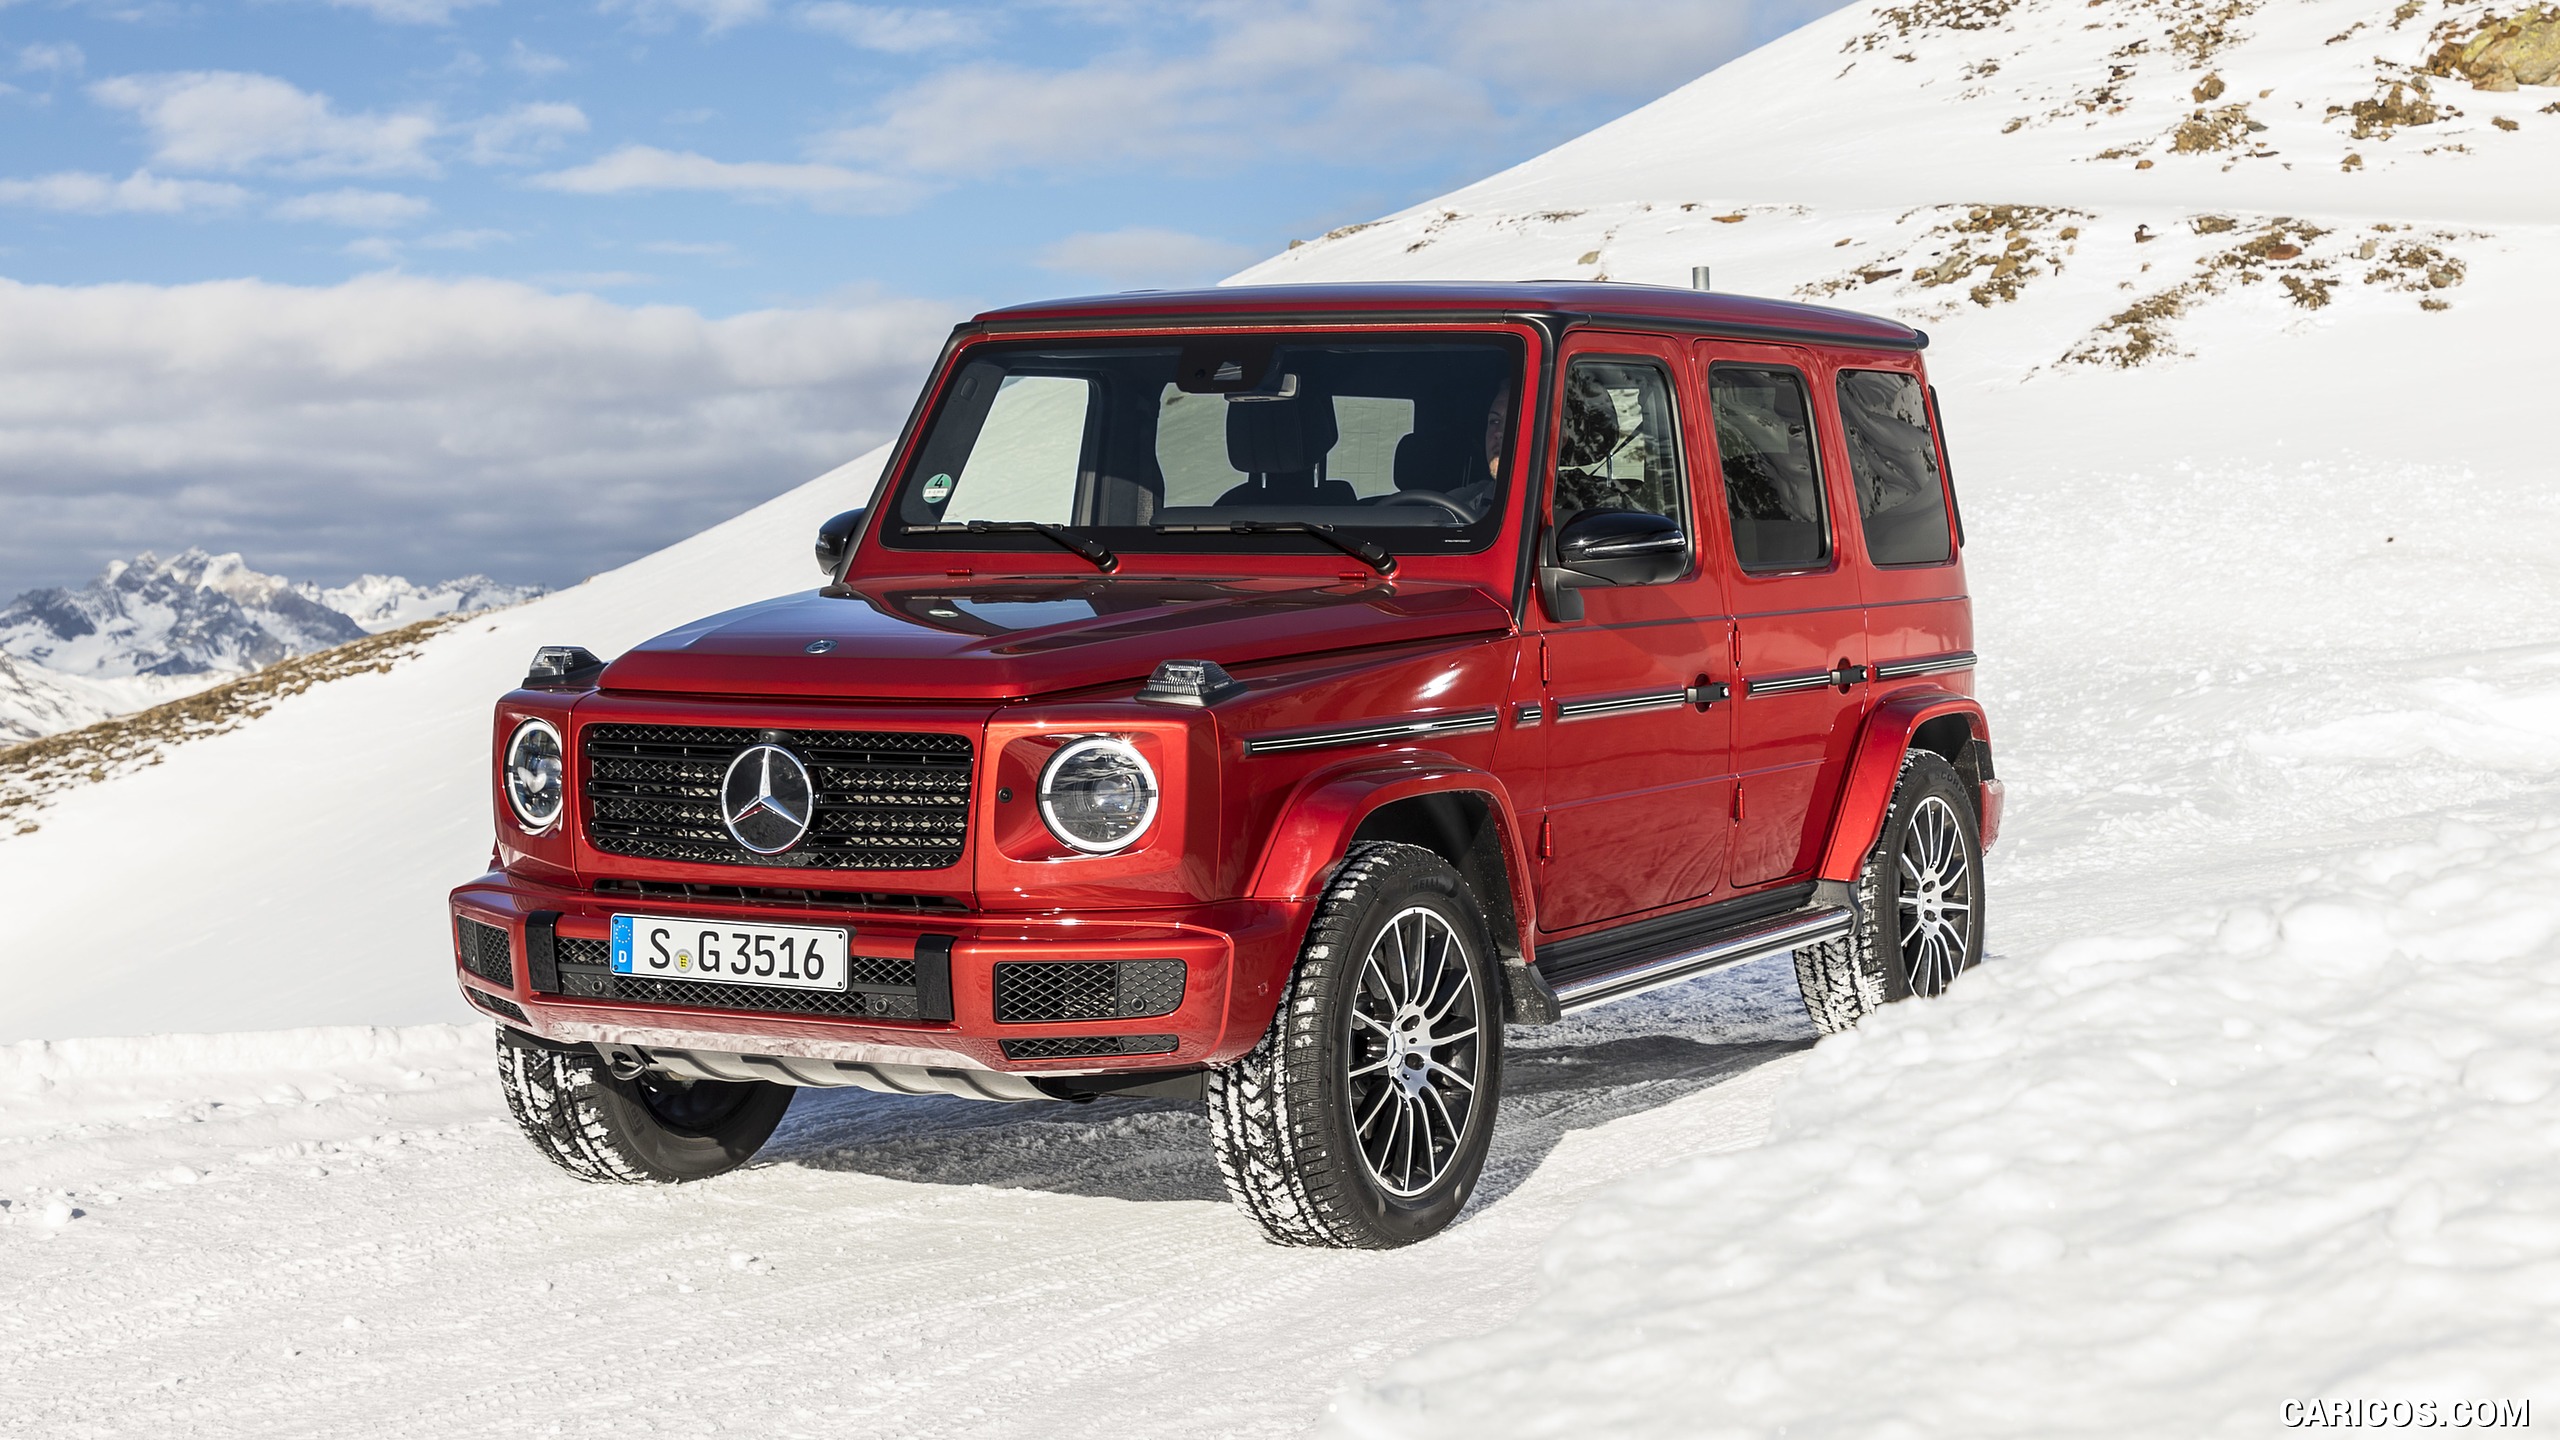 2019 Mercedes-Benz G 350 d (Designo Hyazinth Red Metallic) - In Snow - Front Three-Quarter, #8 of 51